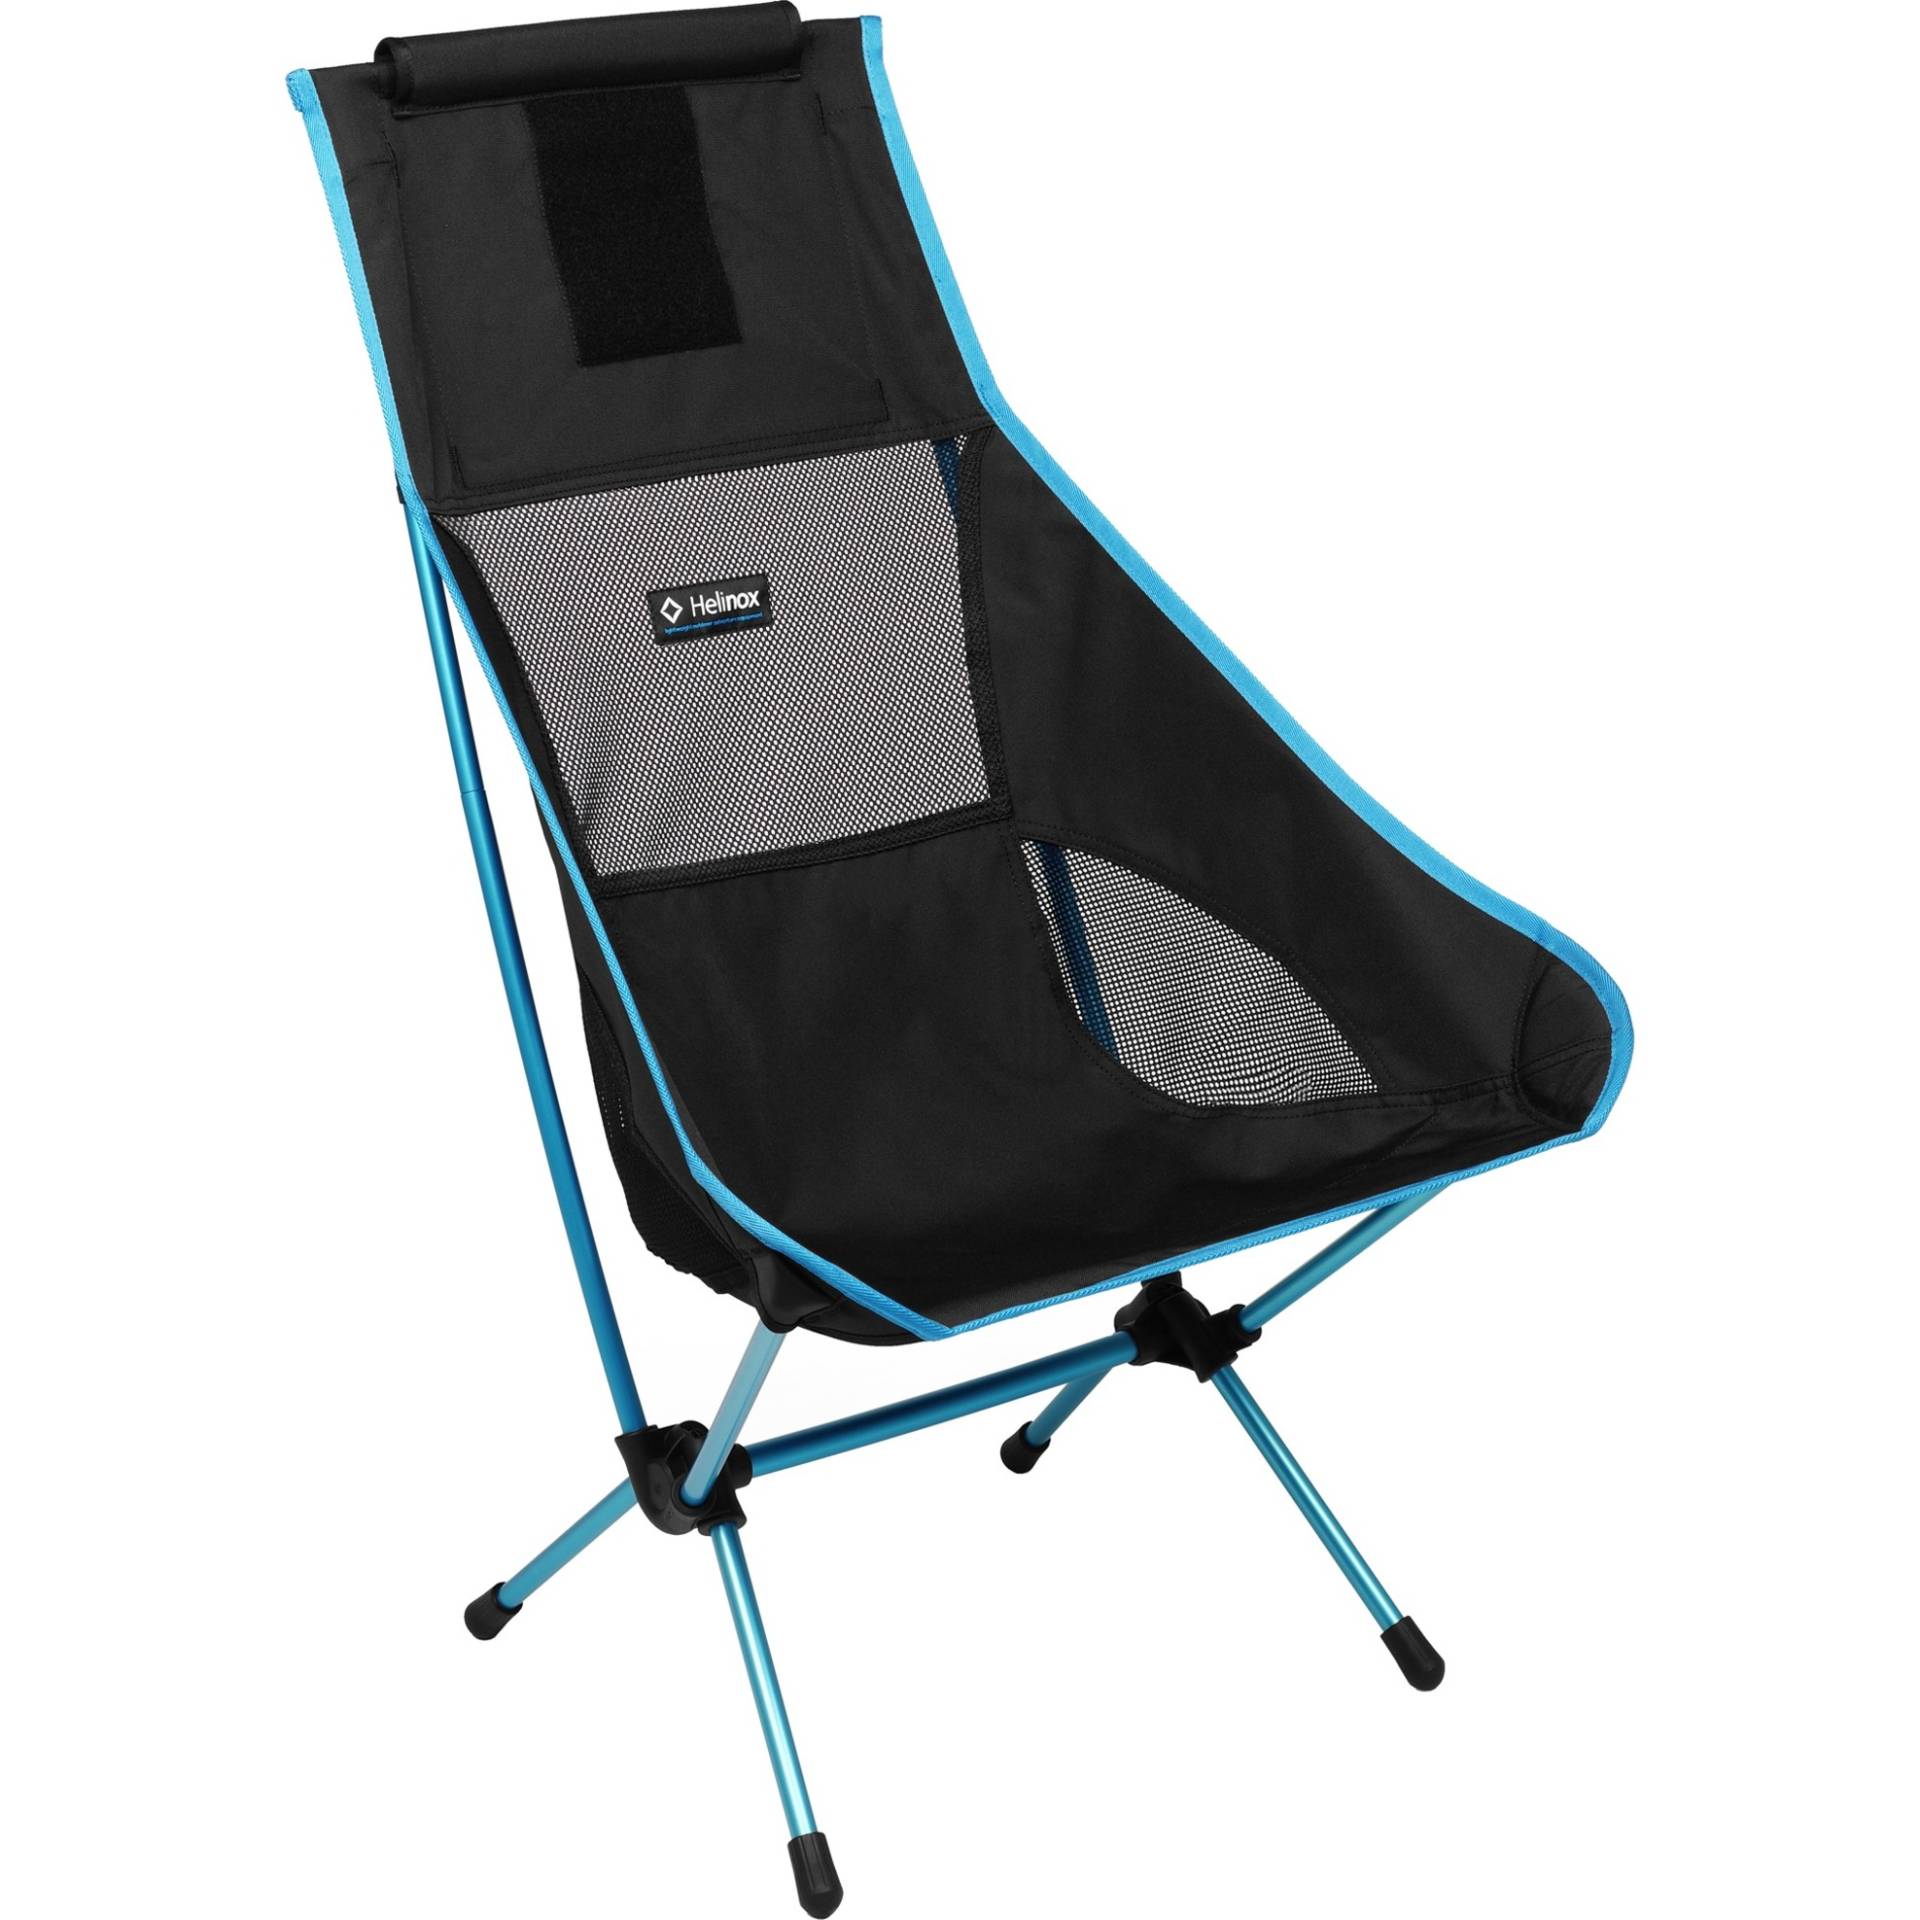 Camping-Stuhl Chair Two 12851R2 von Helinox